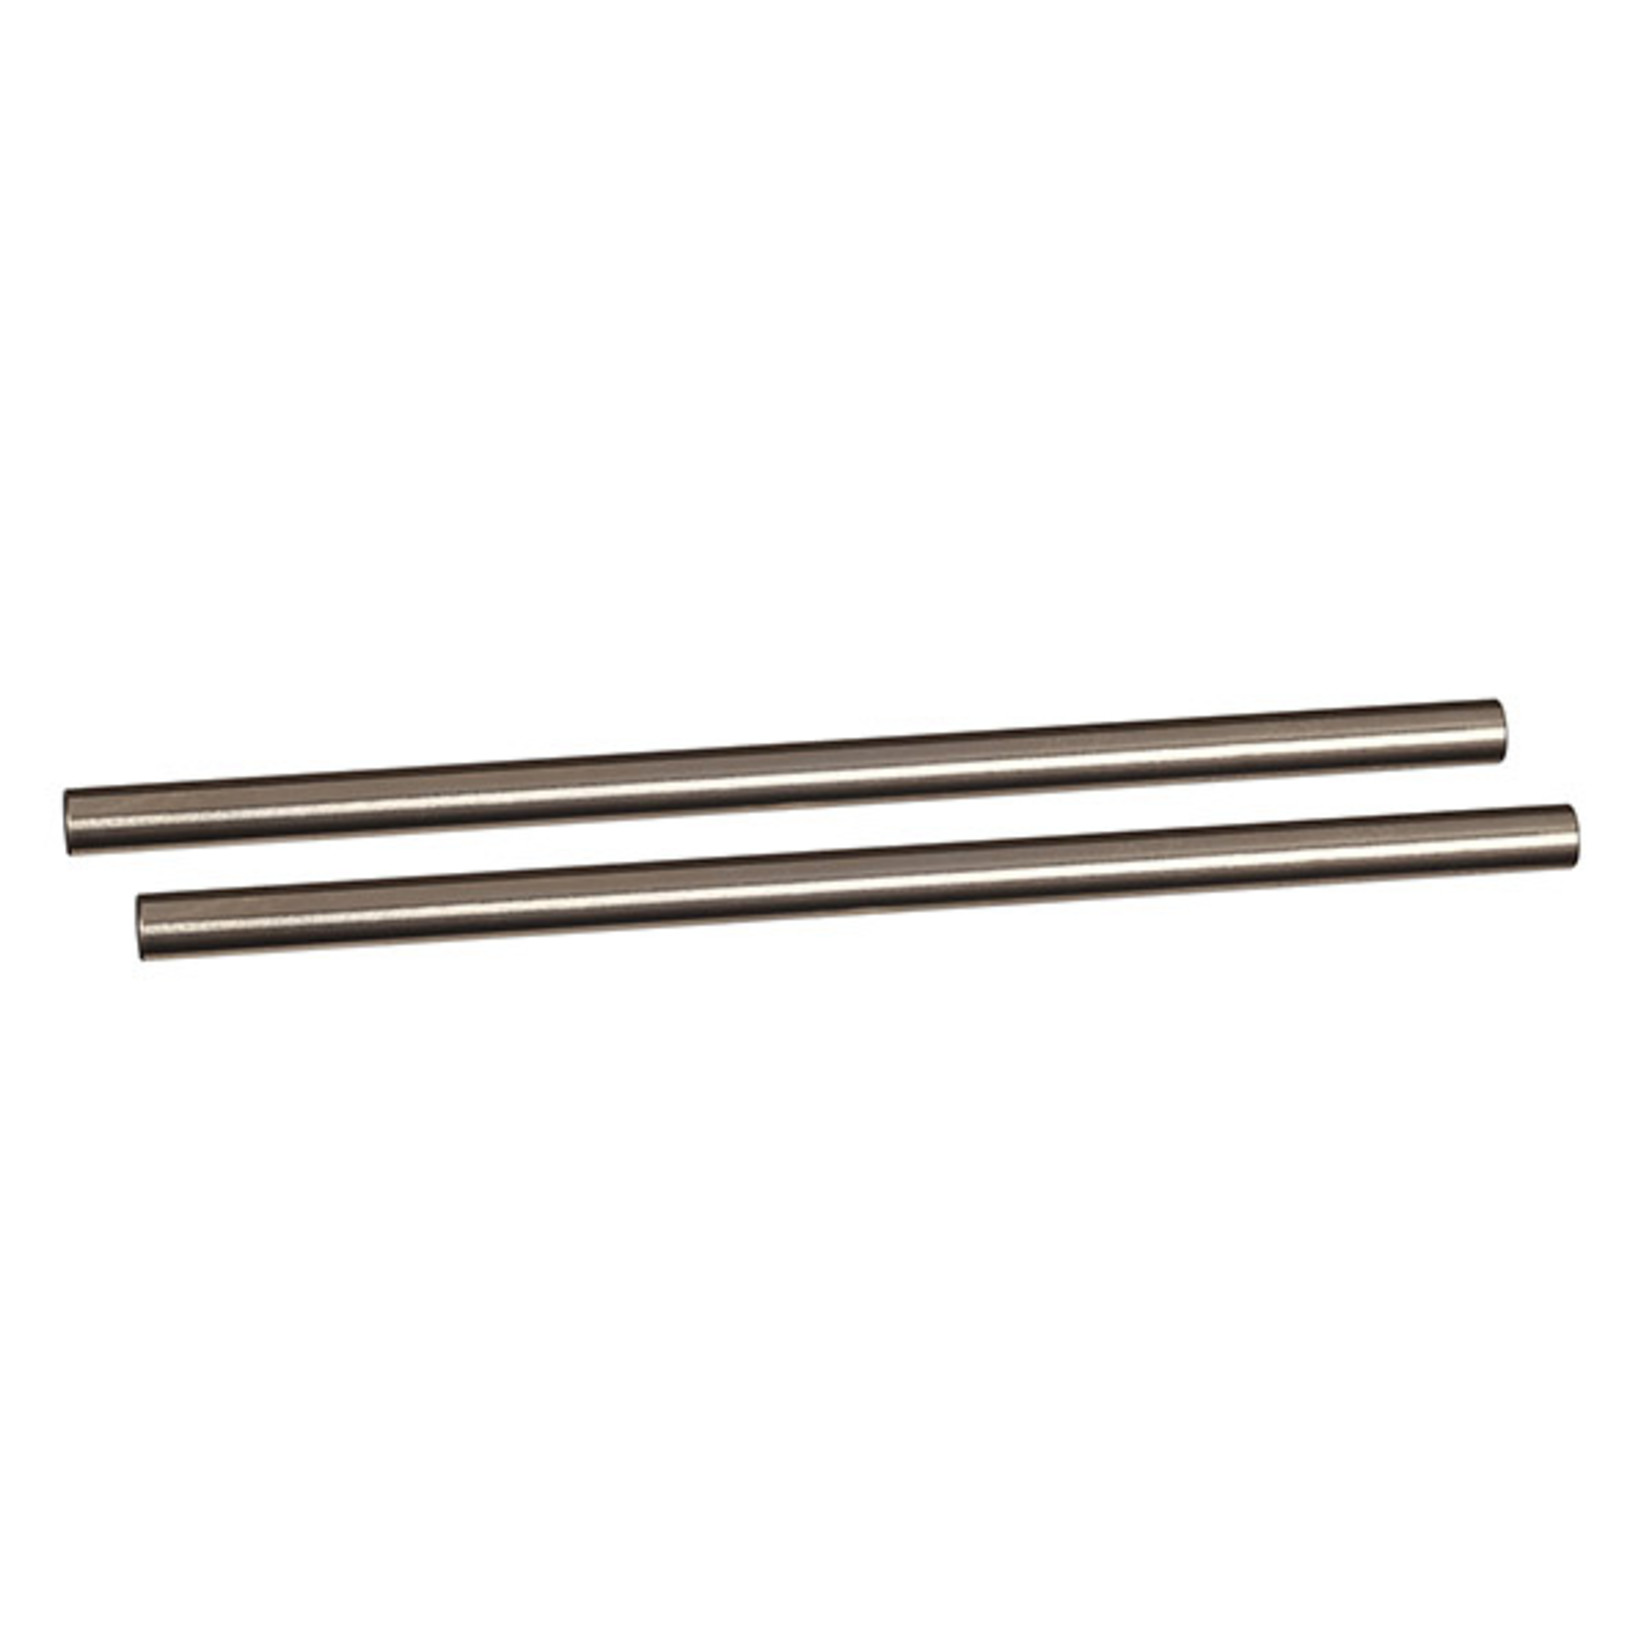 Traxxas 7741 - Suspension pins, 4x85mm (hardened steel) (2